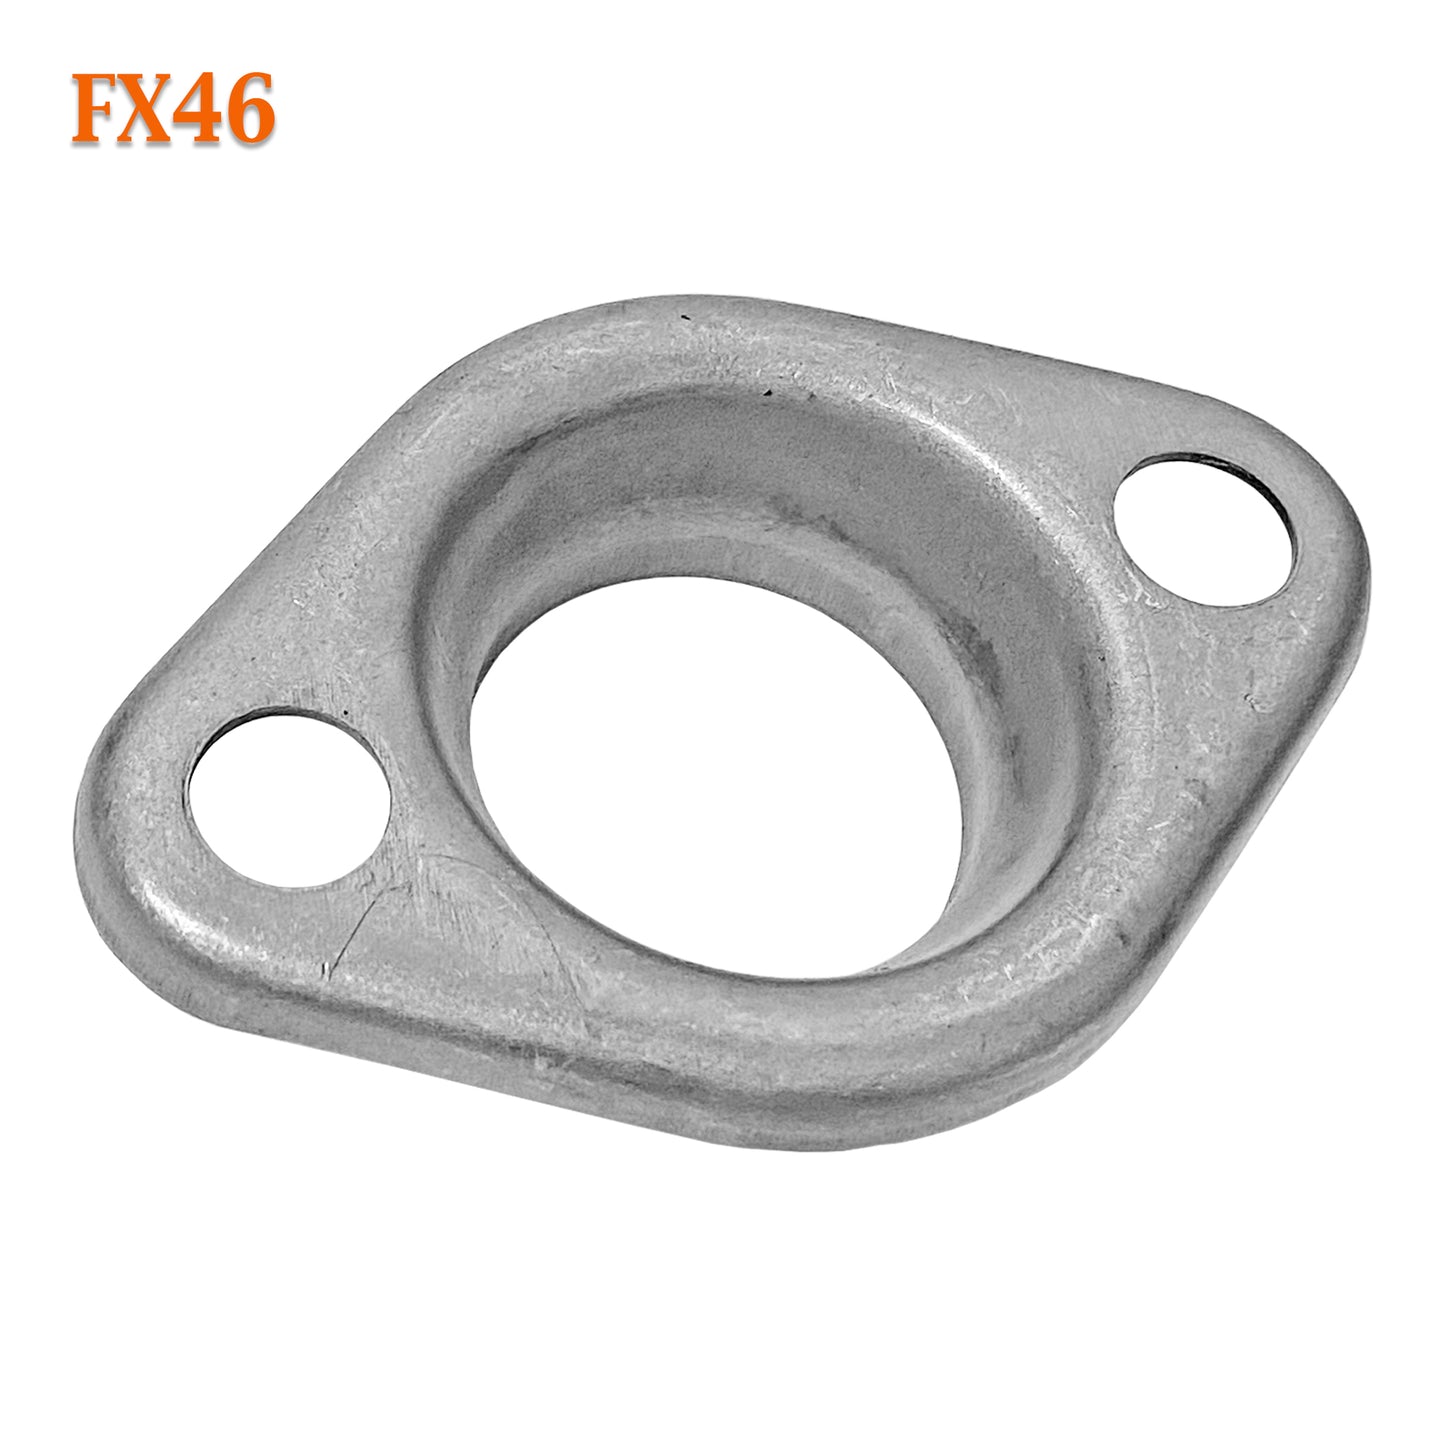 FX46 1 3/4" 1.75" ID Exhaust Flange Formed Oval Mild Steel Repair Replacement